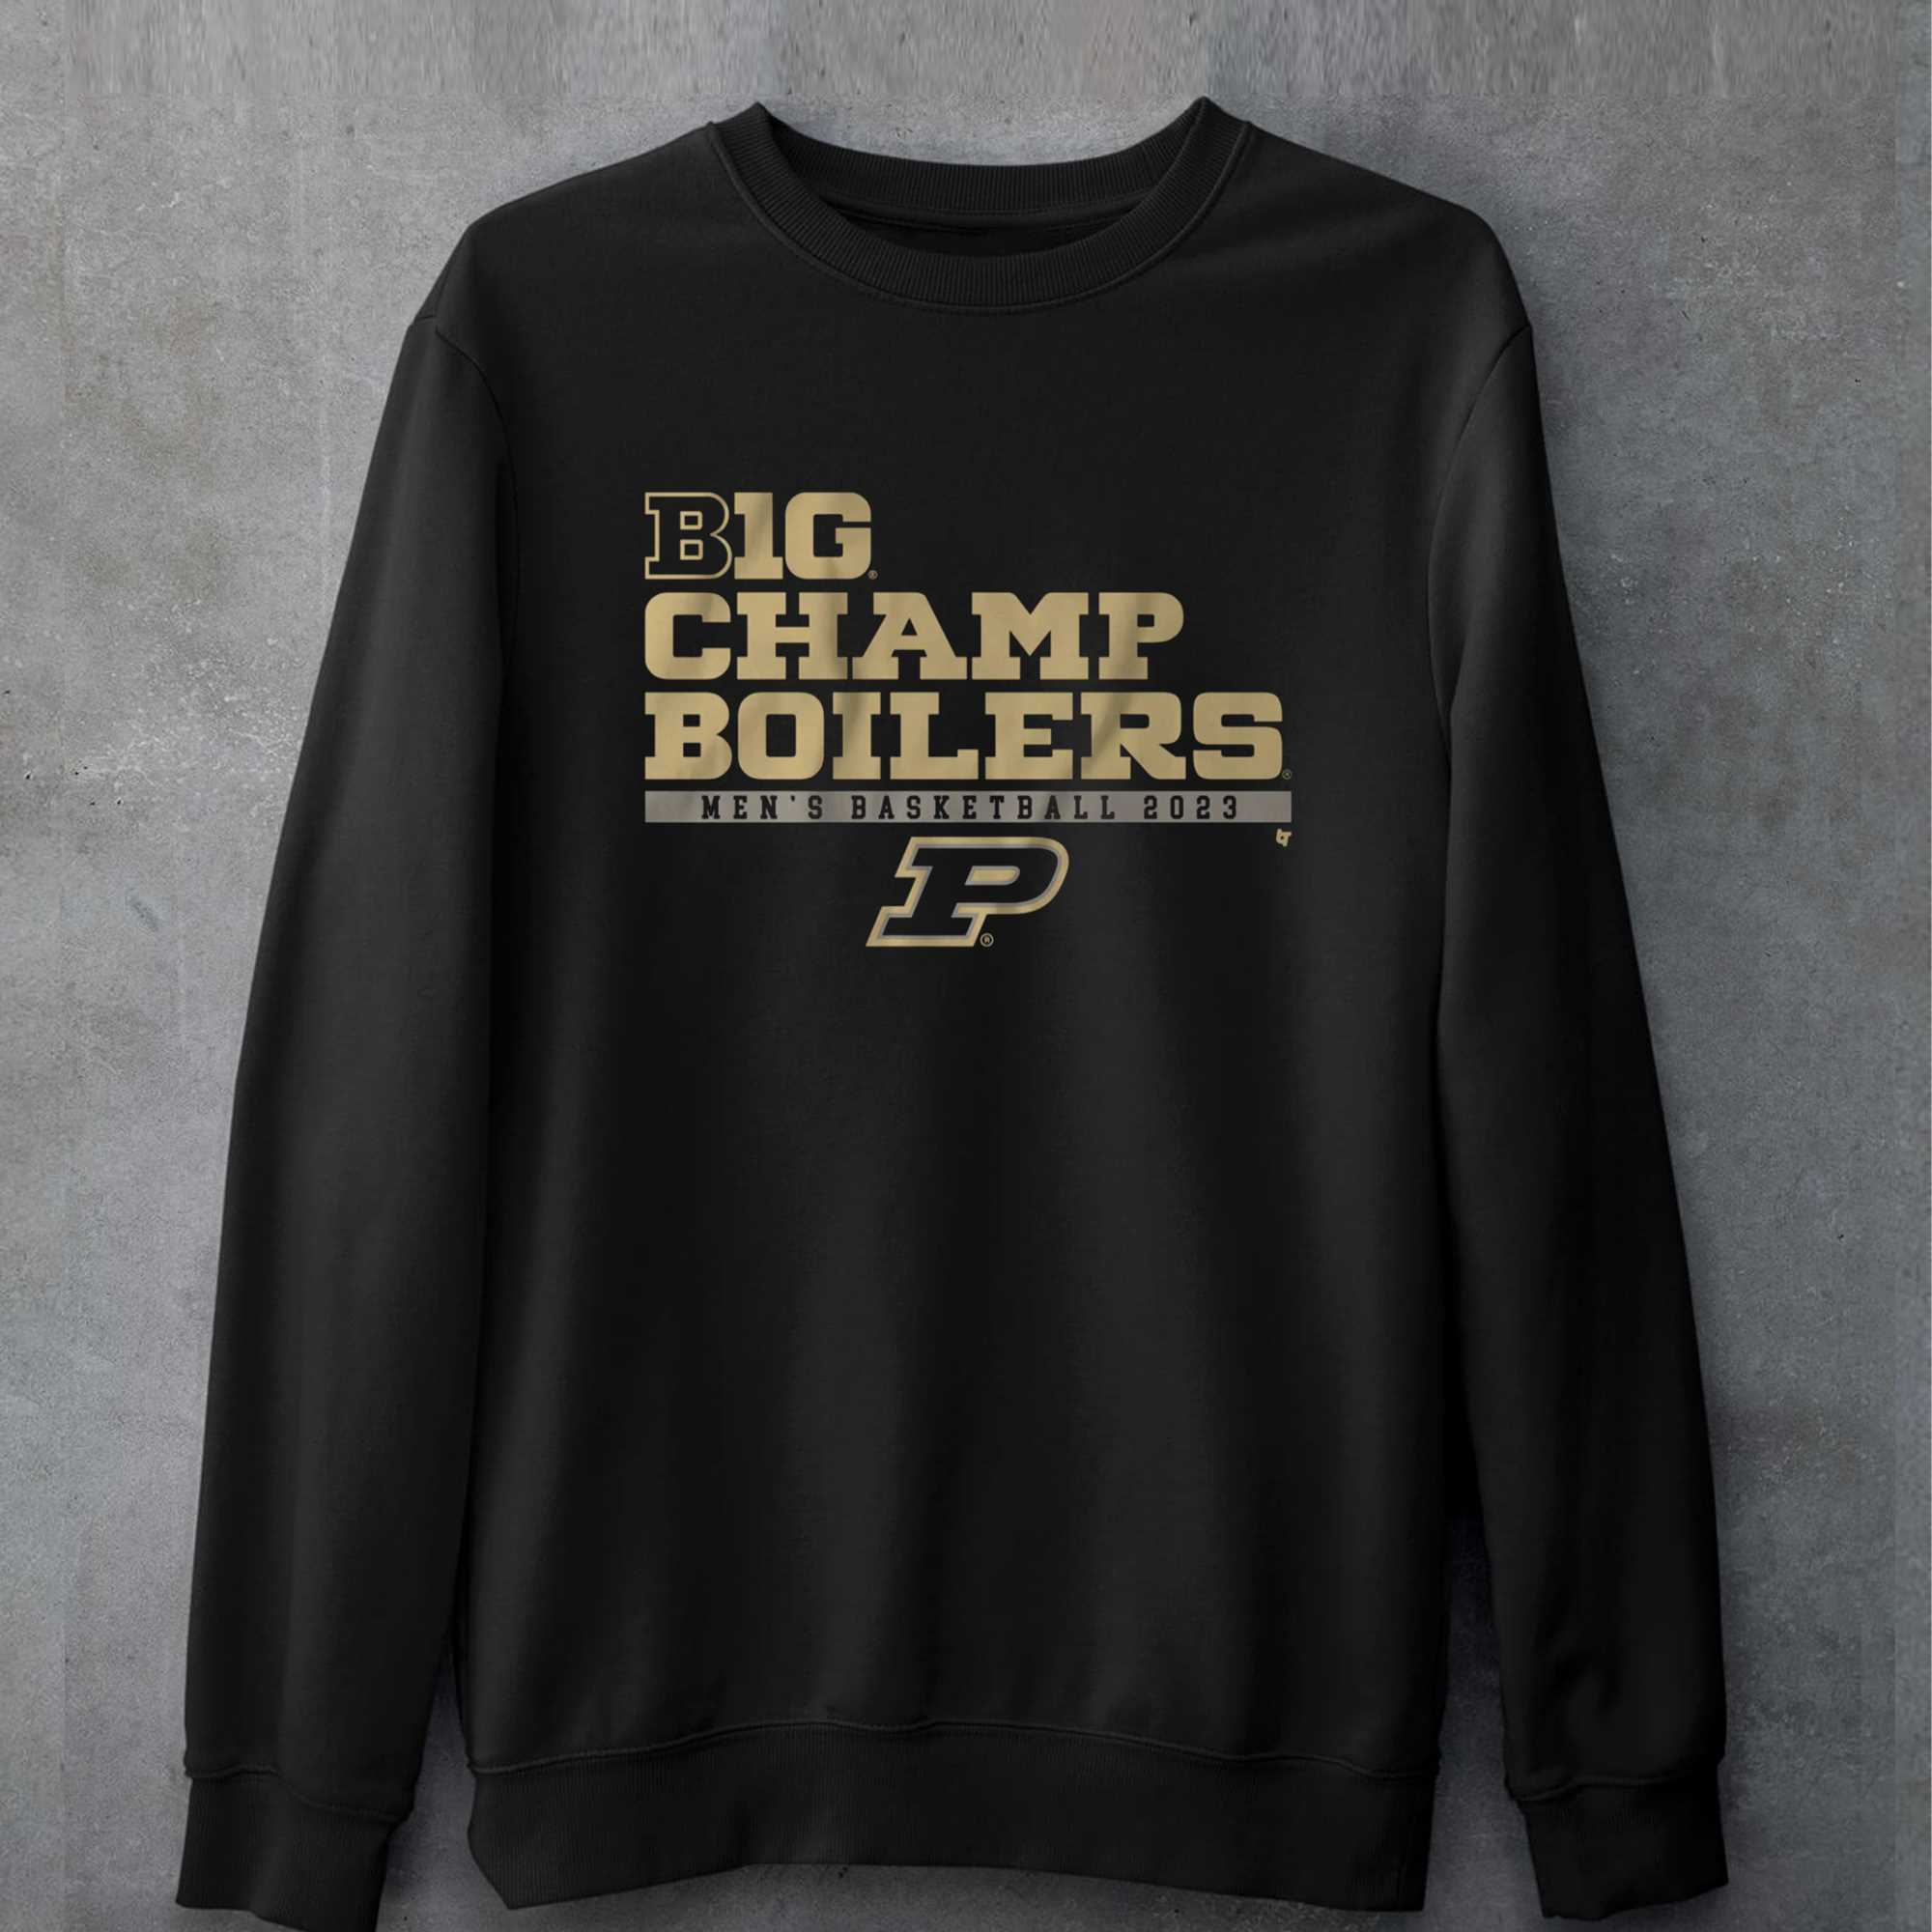 Purdue Basketball B1g Champ Boilers T-shirt 